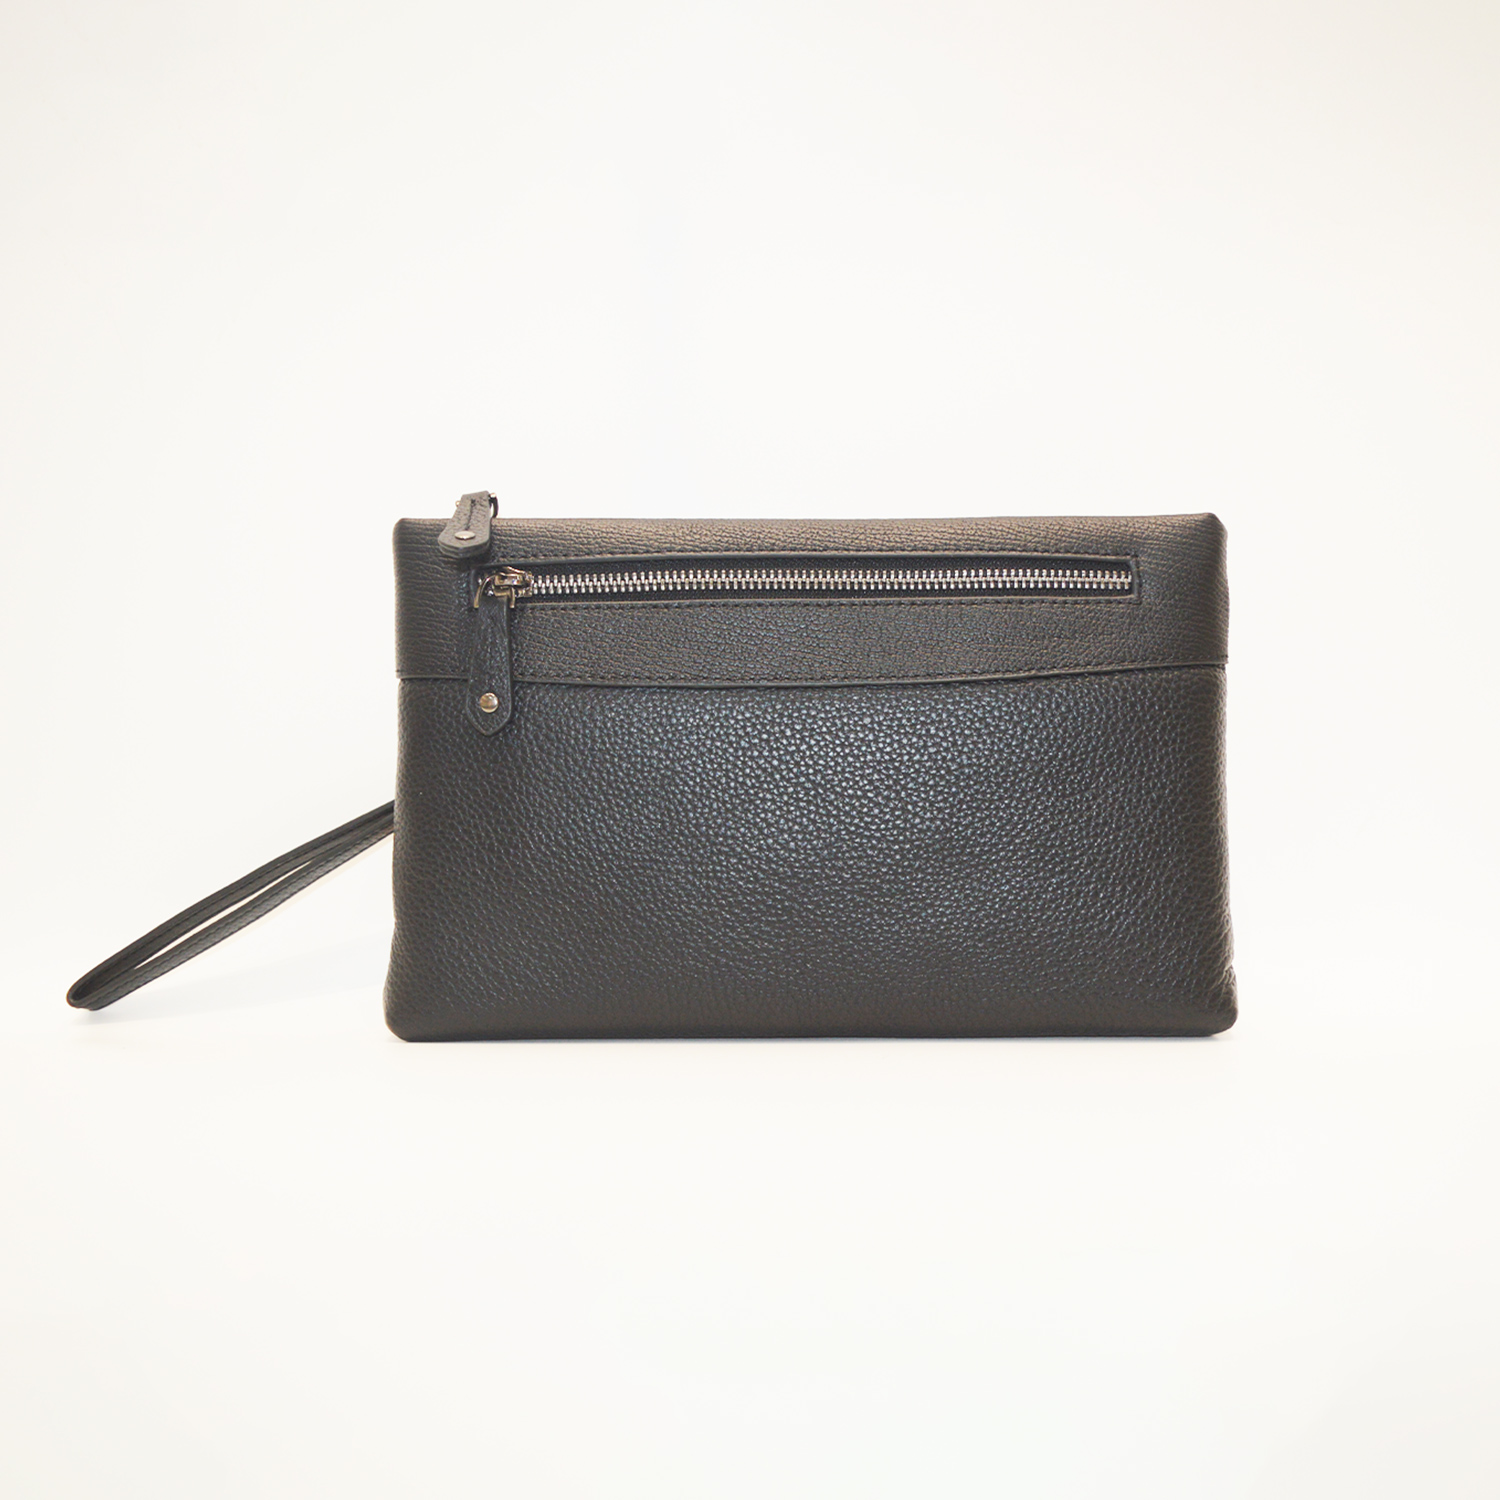 Men's Genuine Leather Envelope Clutch Handbag with Phone Pocket and 6 Card Slots